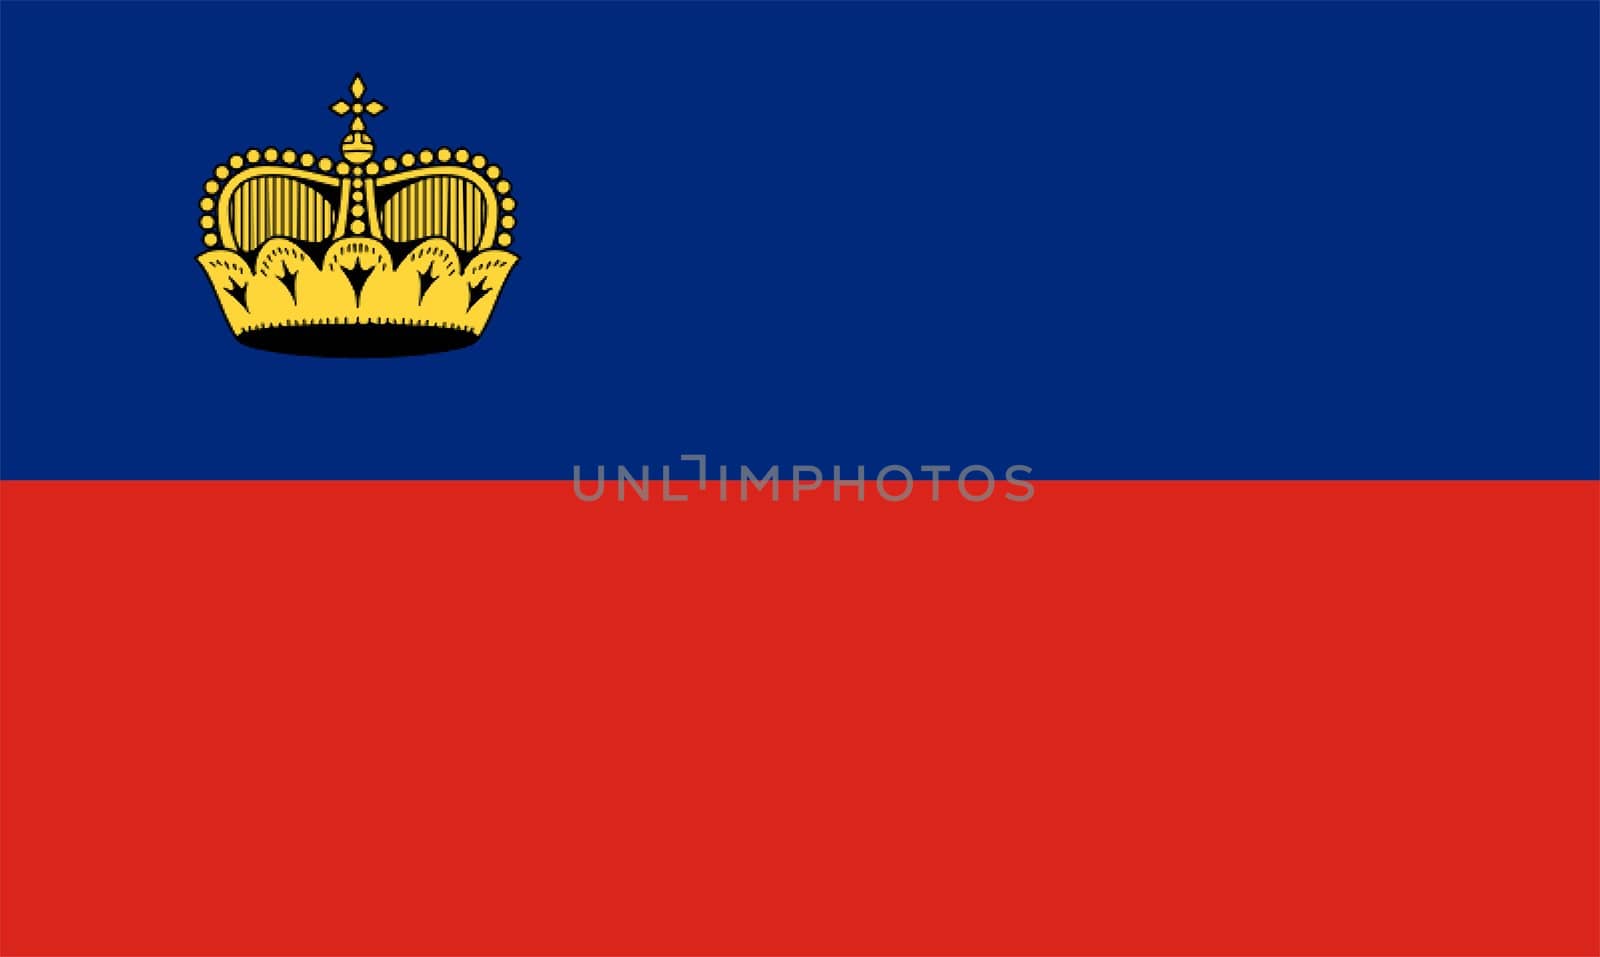 2D illustration of the flag of Liechtenstein